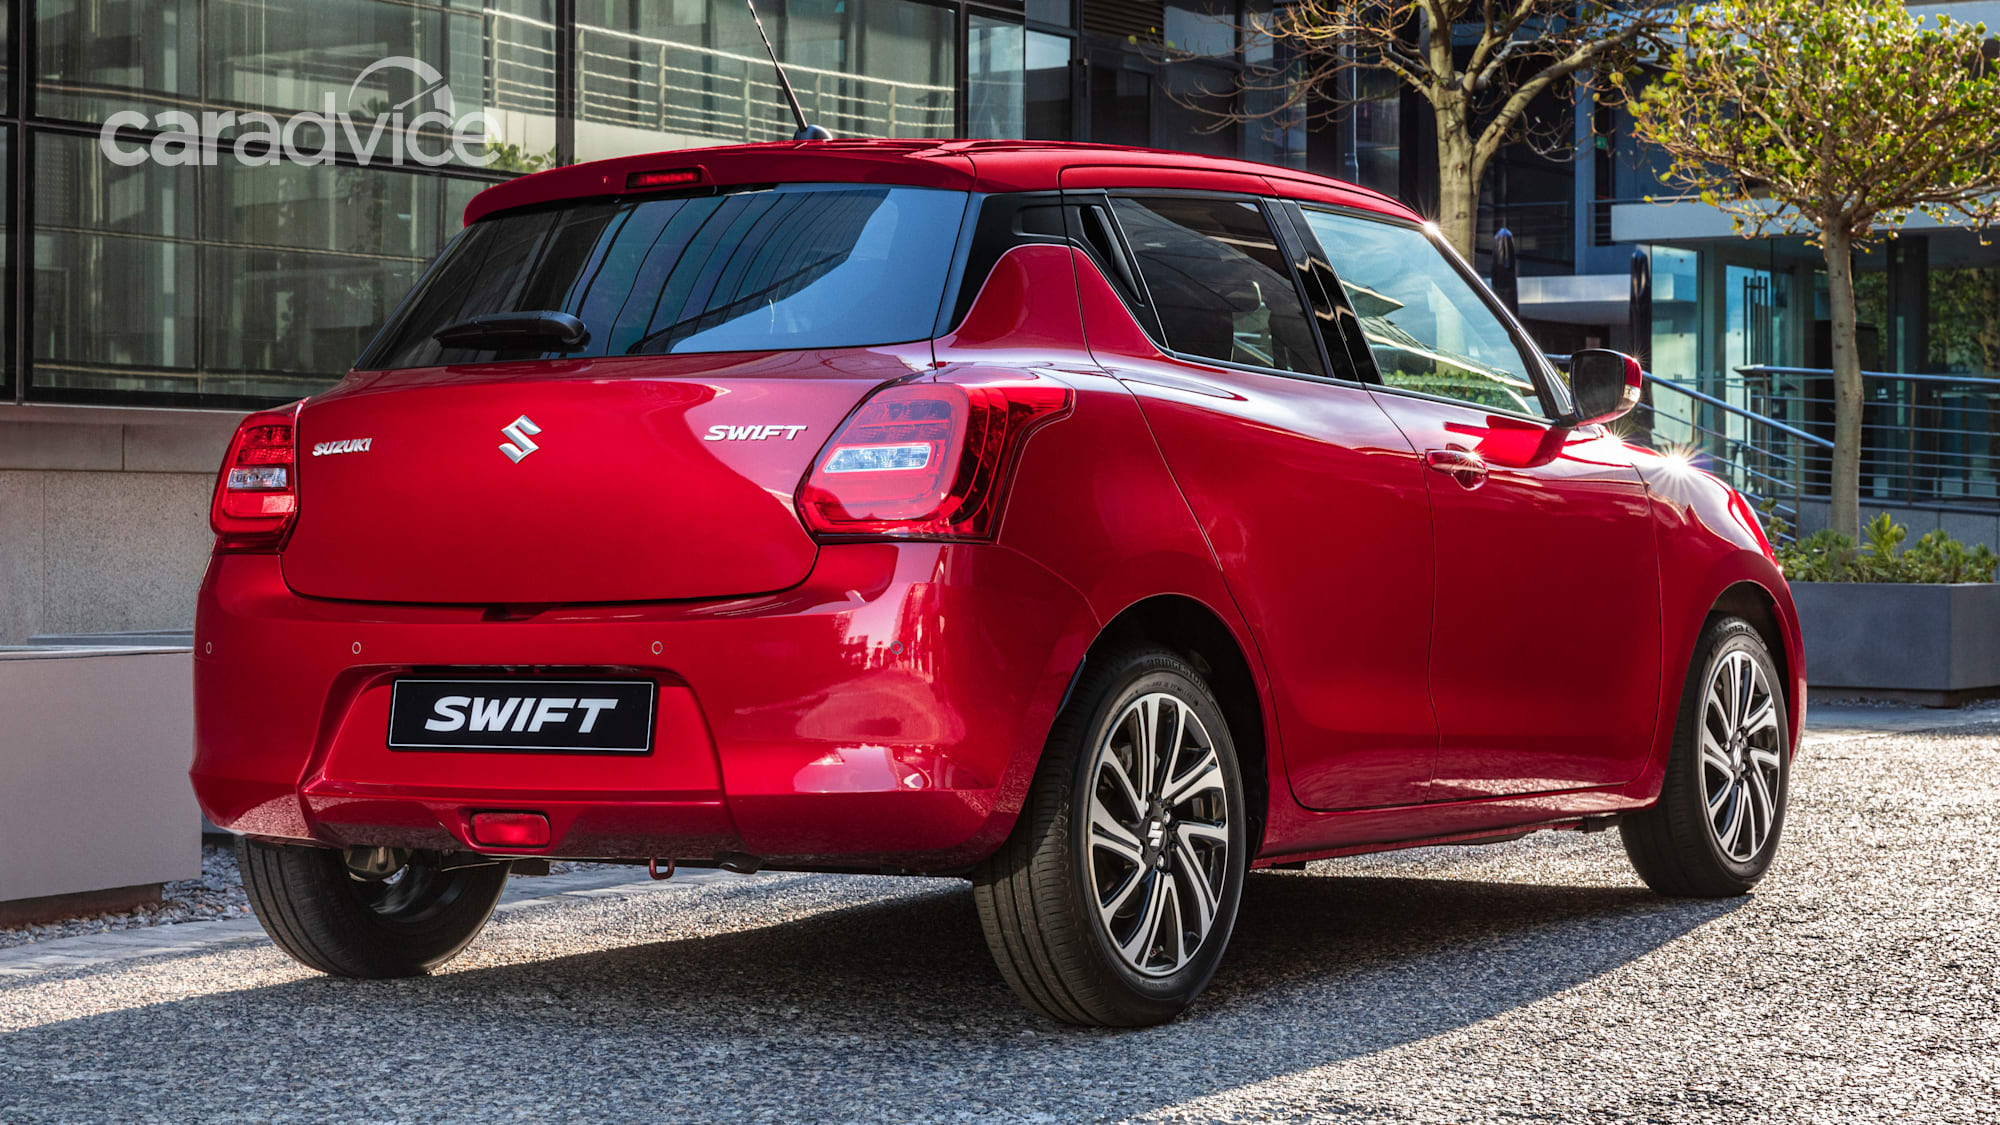 2021 Suzuki Swift in Australia from September | CarAdvice